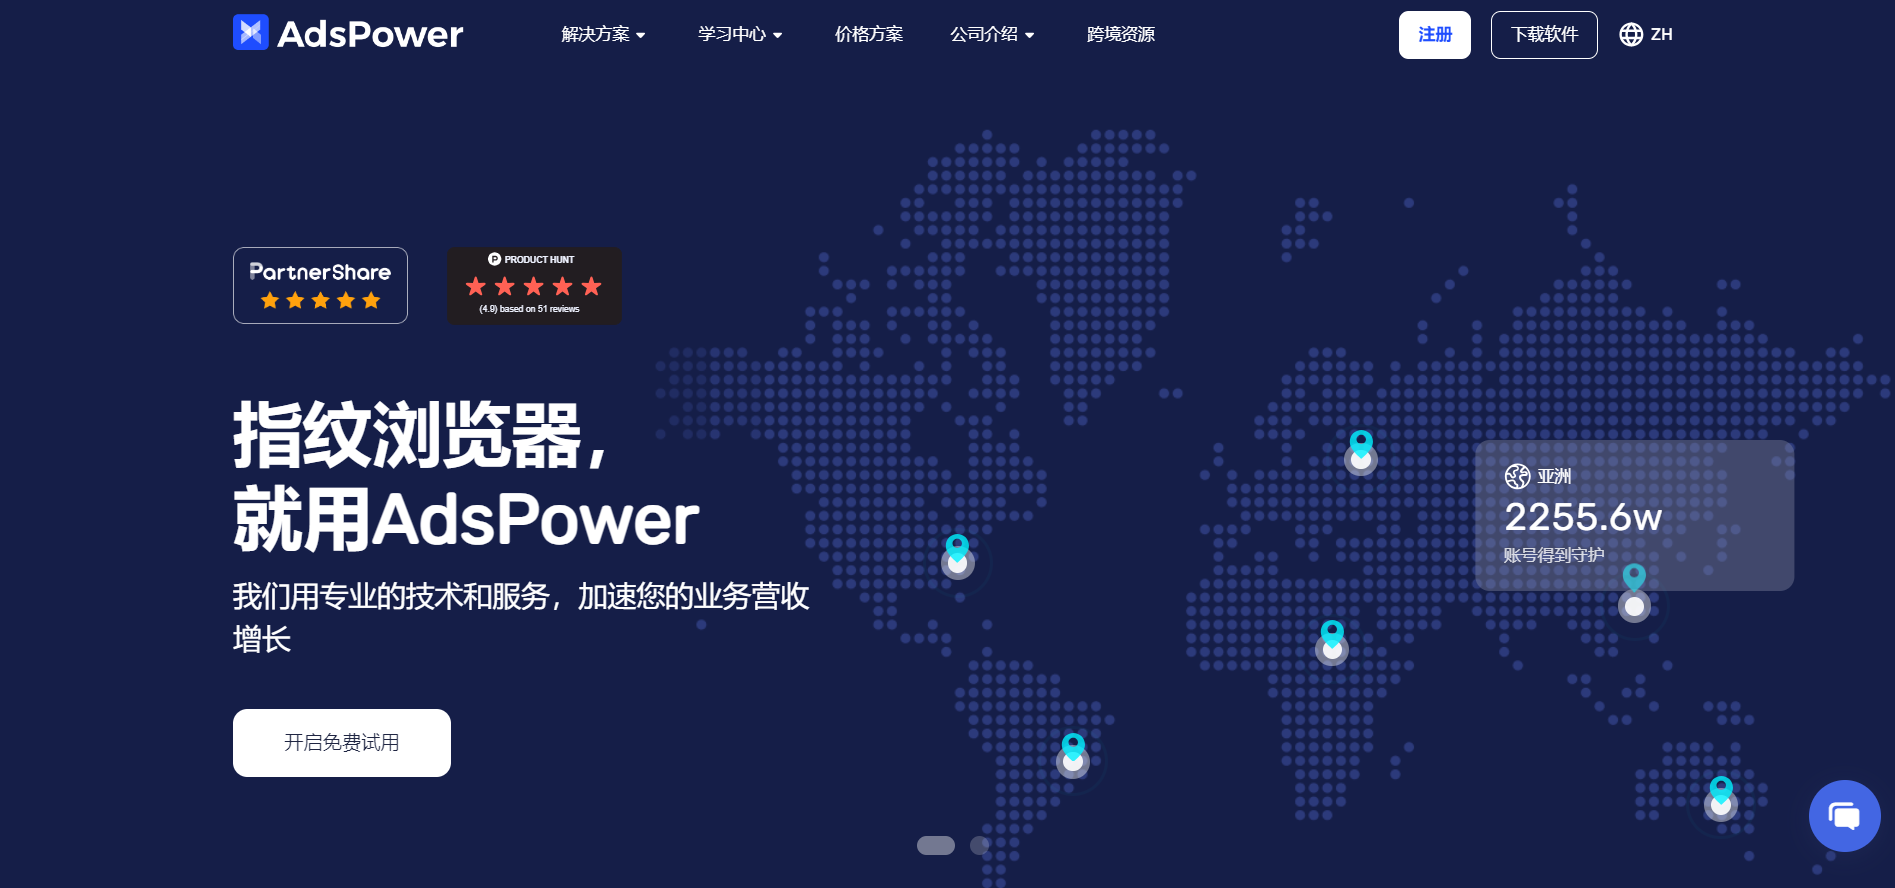 AdsPower官方页面图